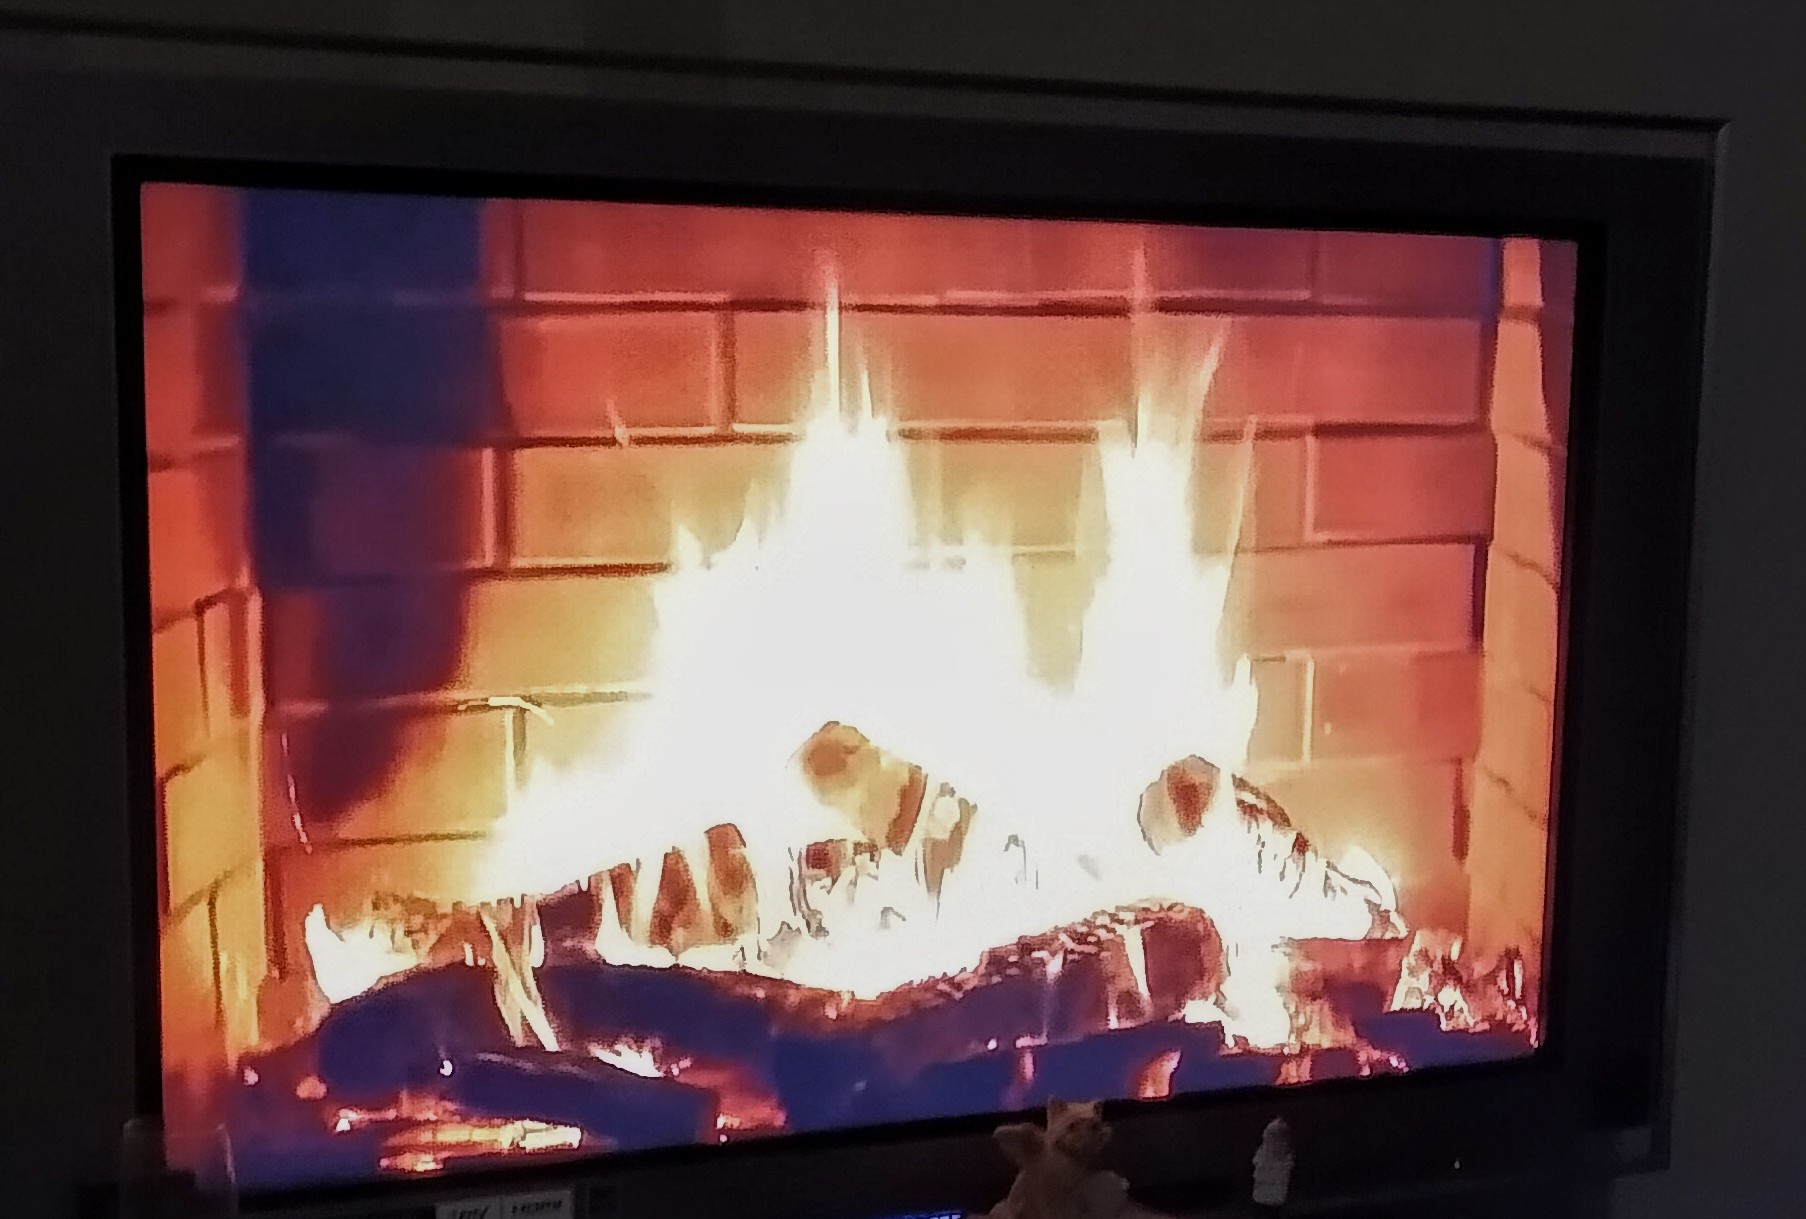 fireplace on my TV